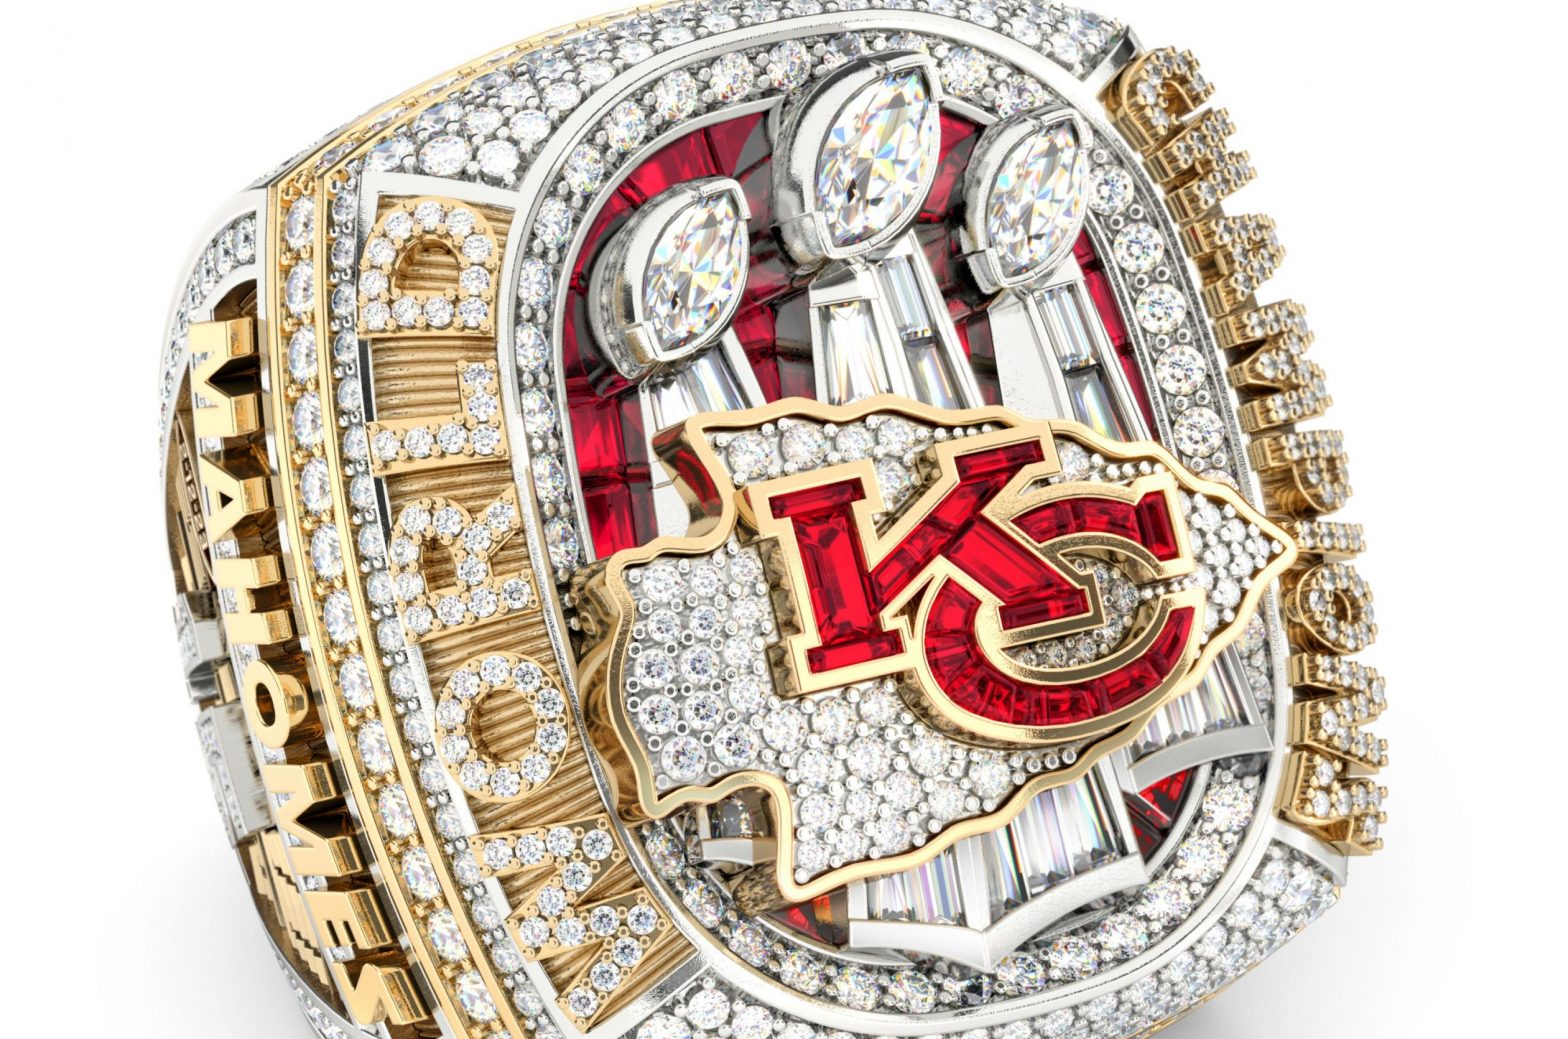 Kansas City Chiefs Super Bowl ring details: Cost, rubies, replica, photos, and more